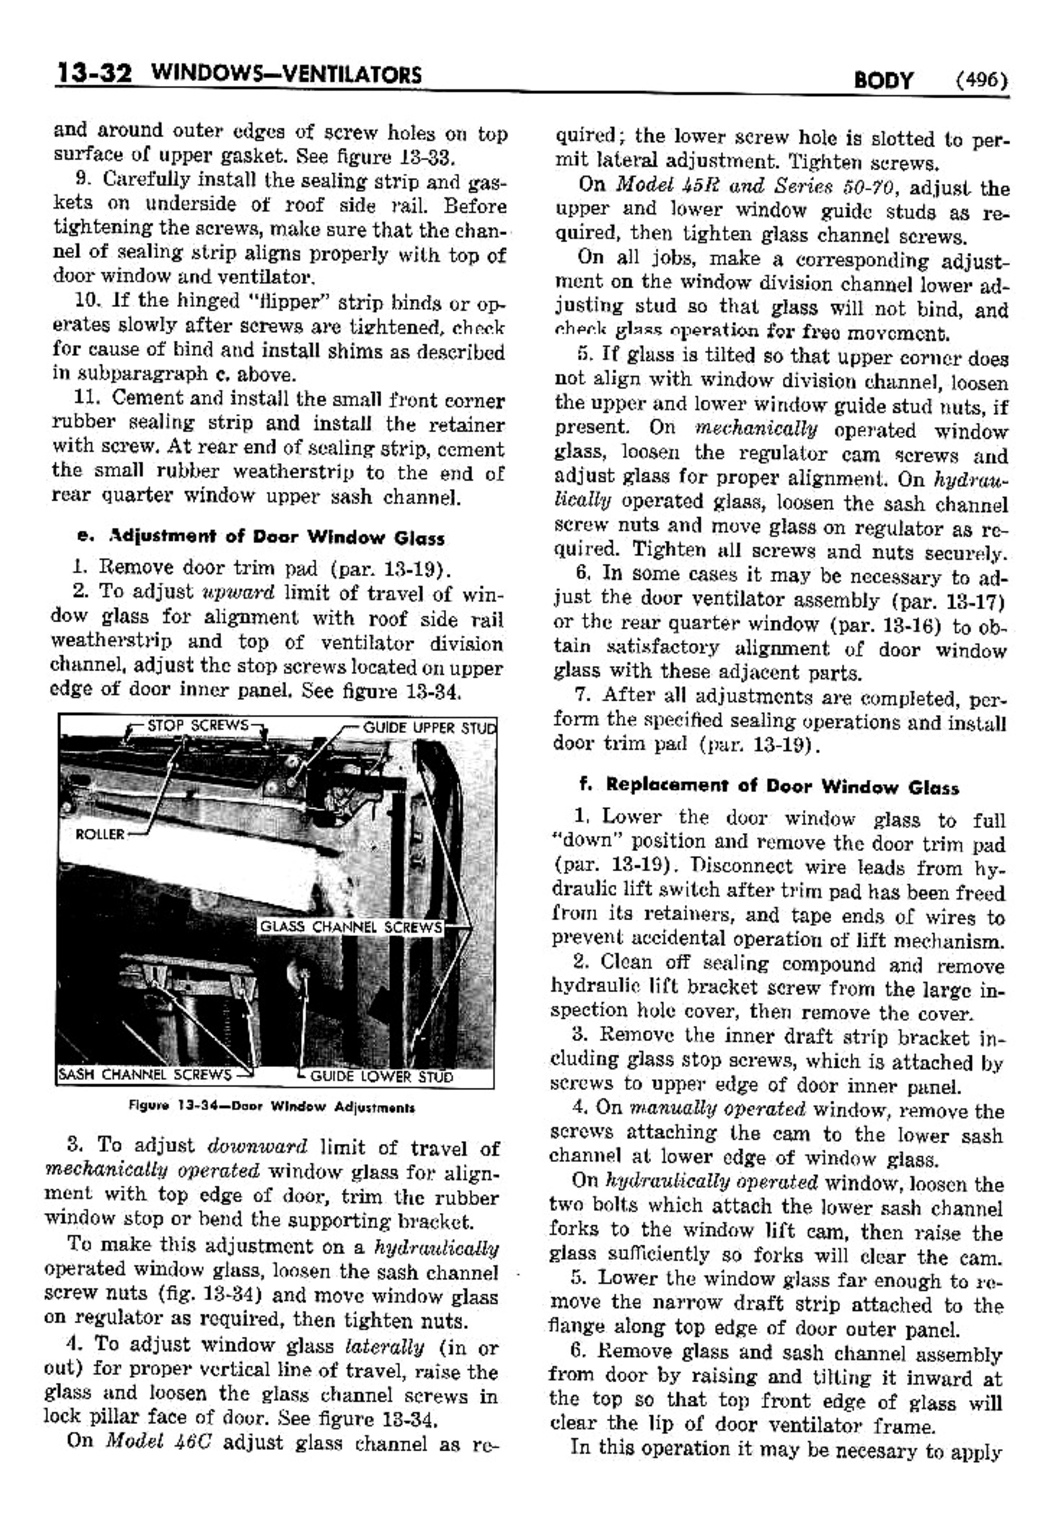 n_14 1952 Buick Shop Manual - Body-032-032.jpg